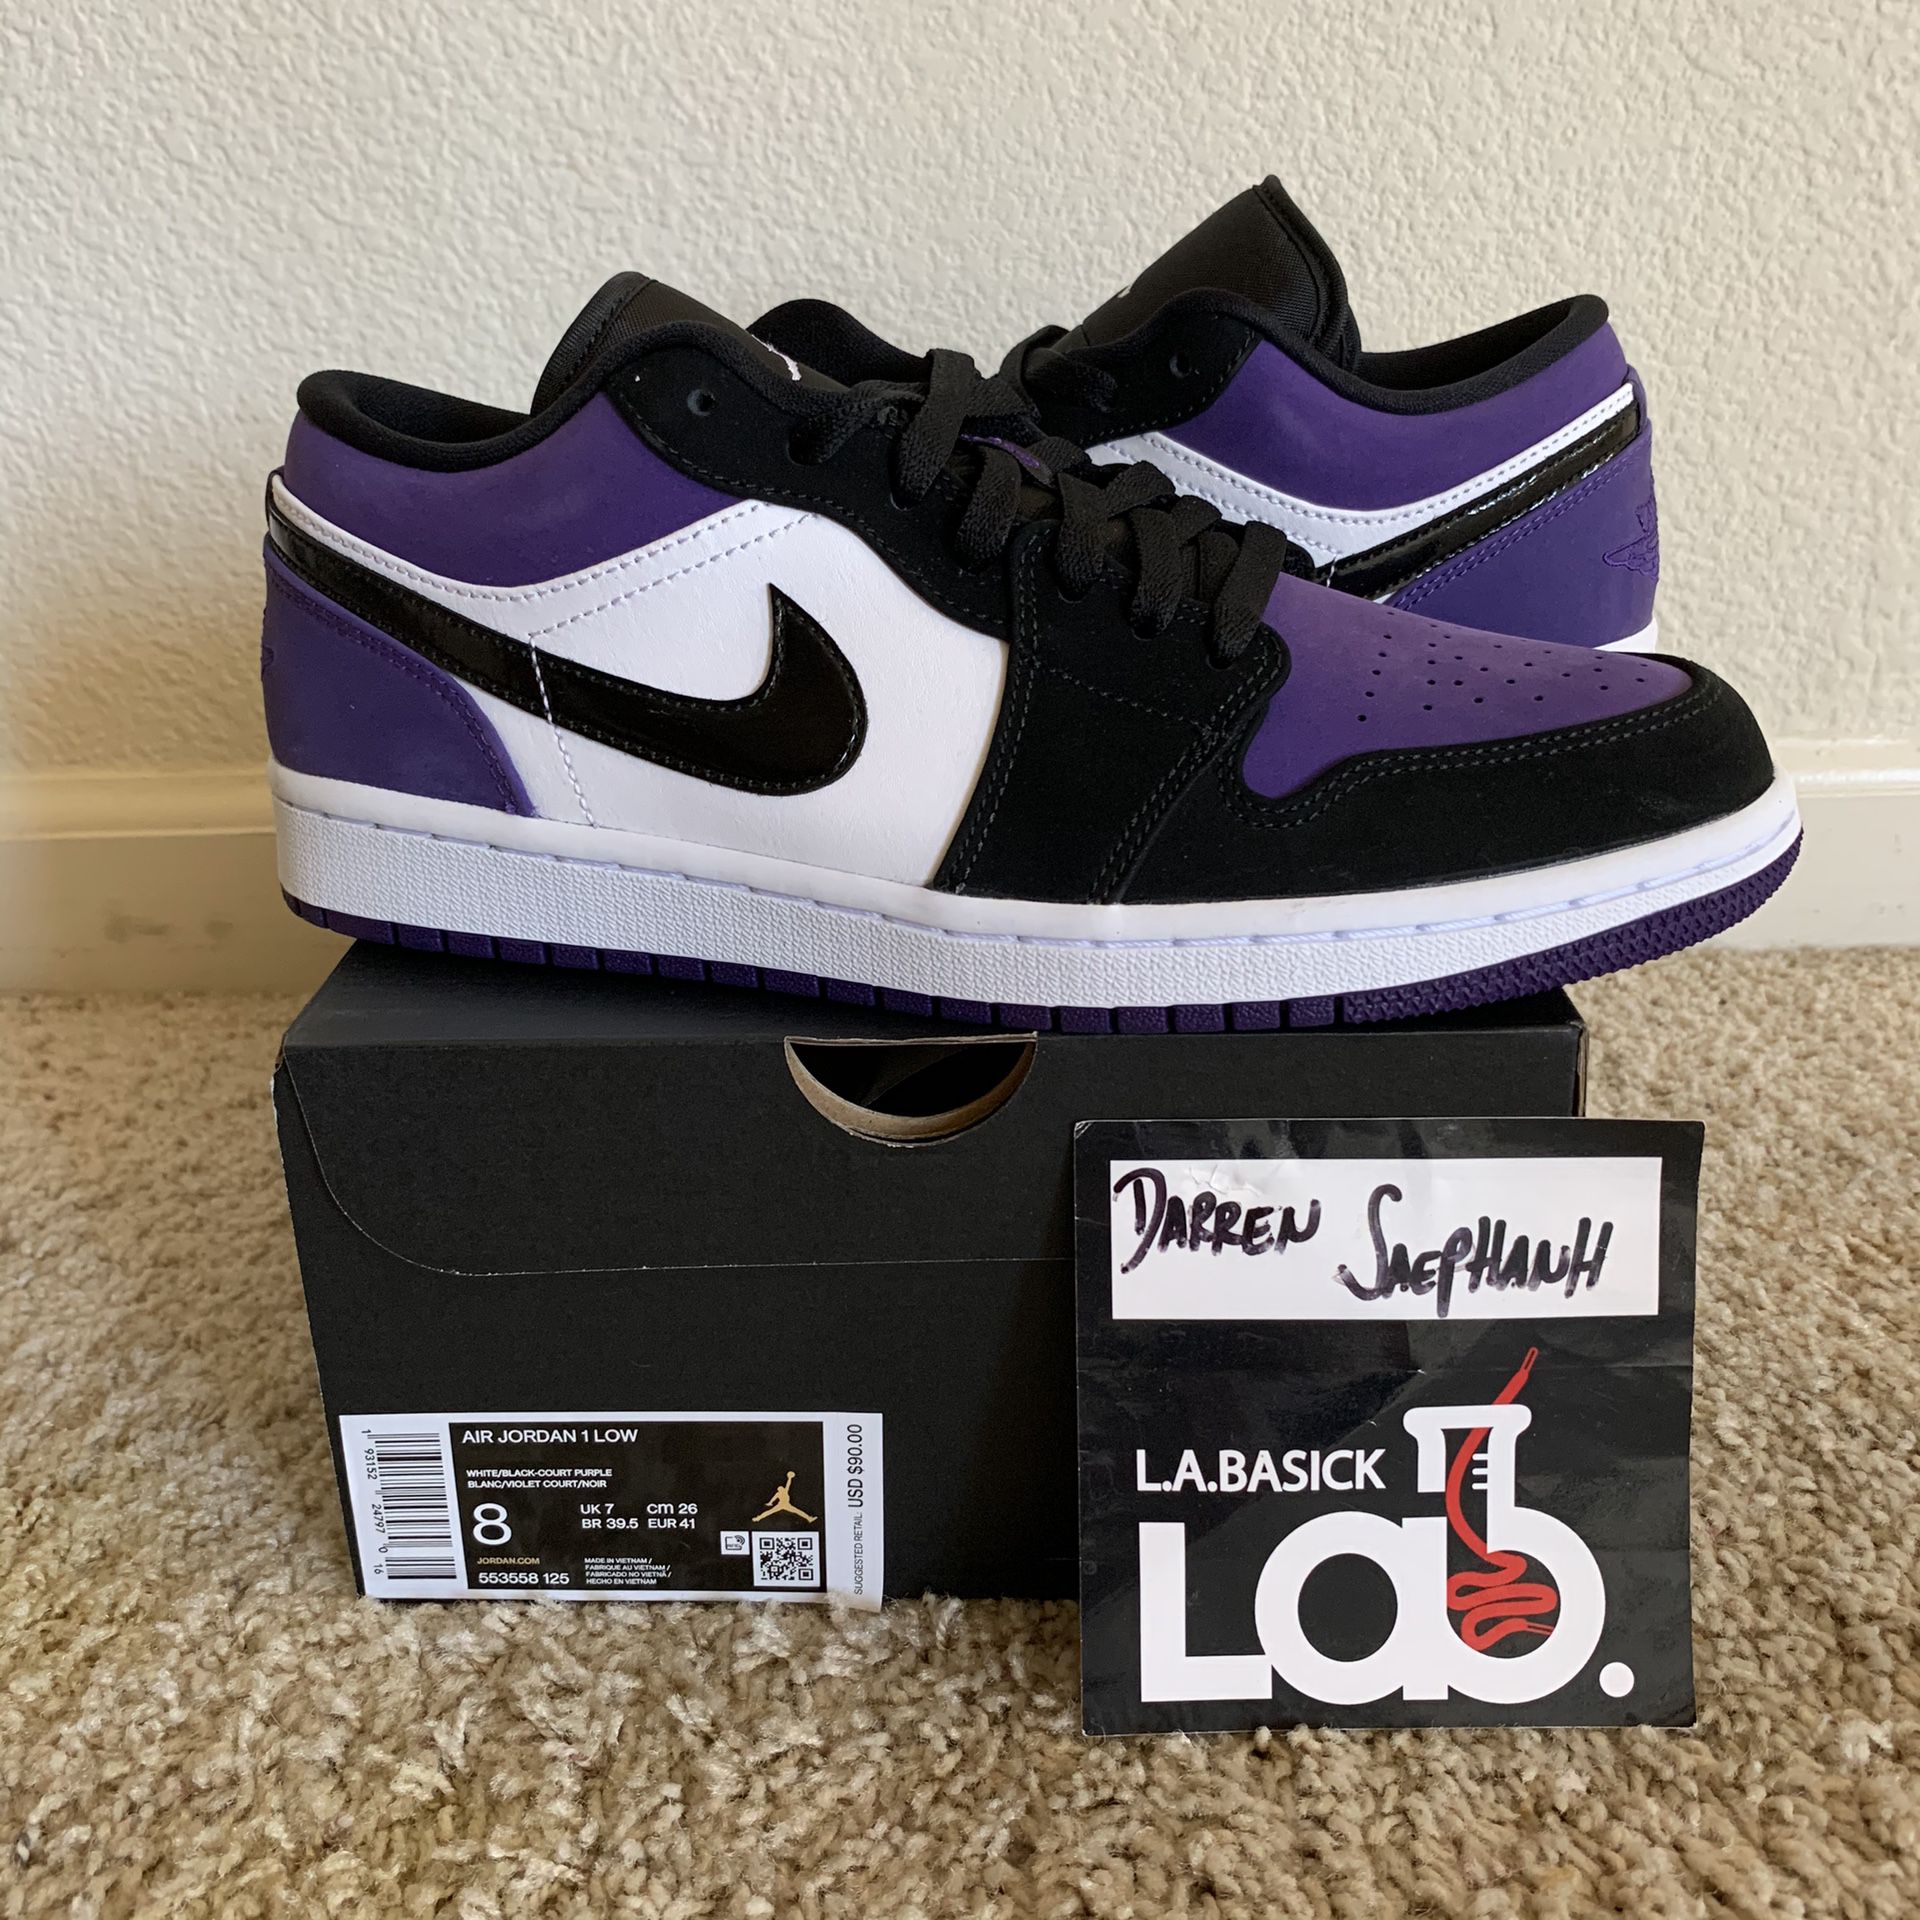 Jordan 1 Low “Court Purple”